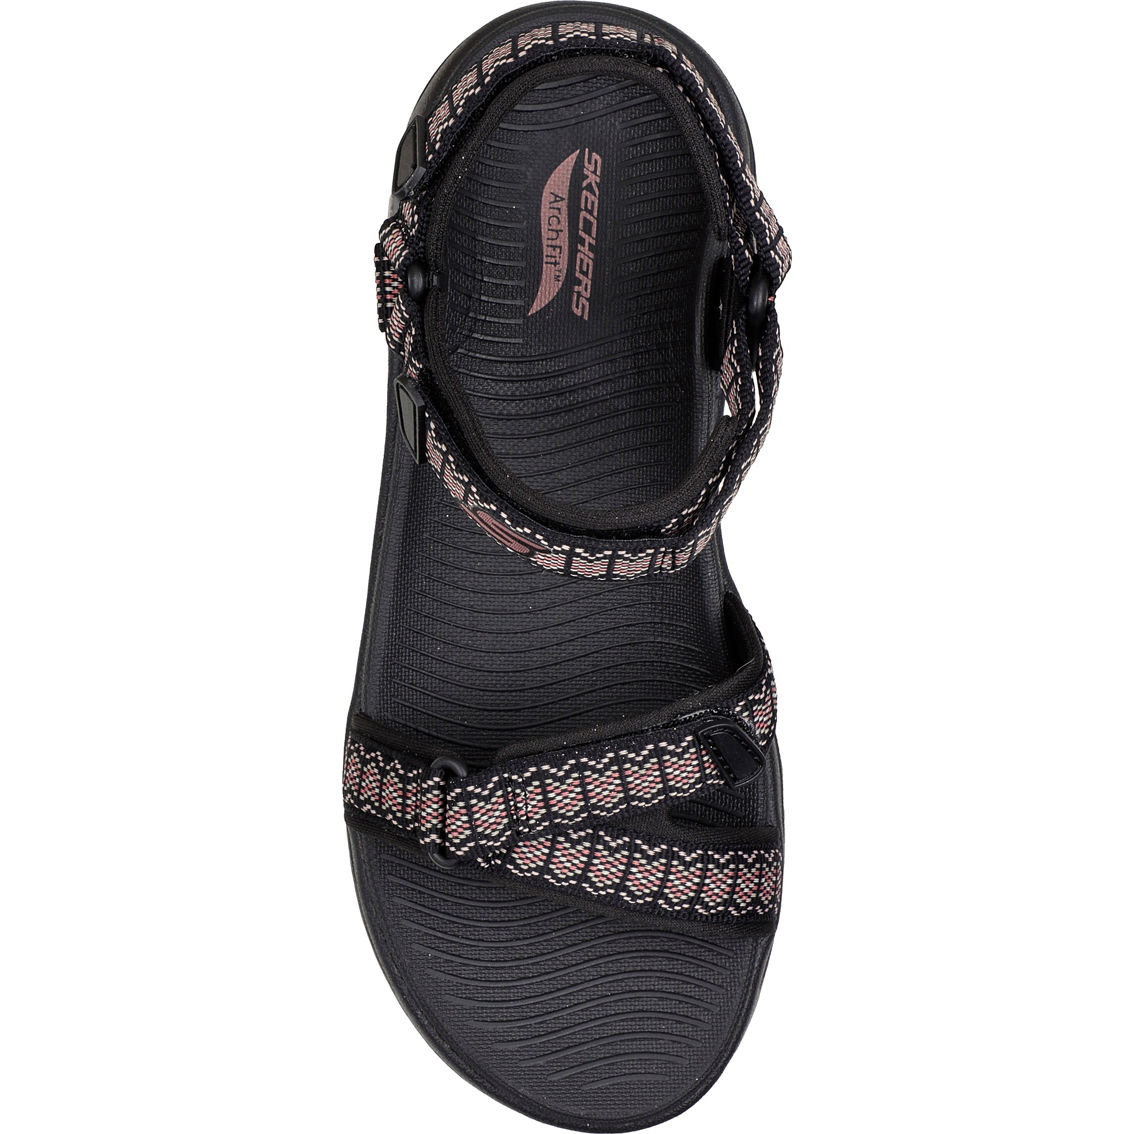 Skechers Women's Go Walk Arch Fit Affinity Quarter Strap Sandals - Image 4 of 5